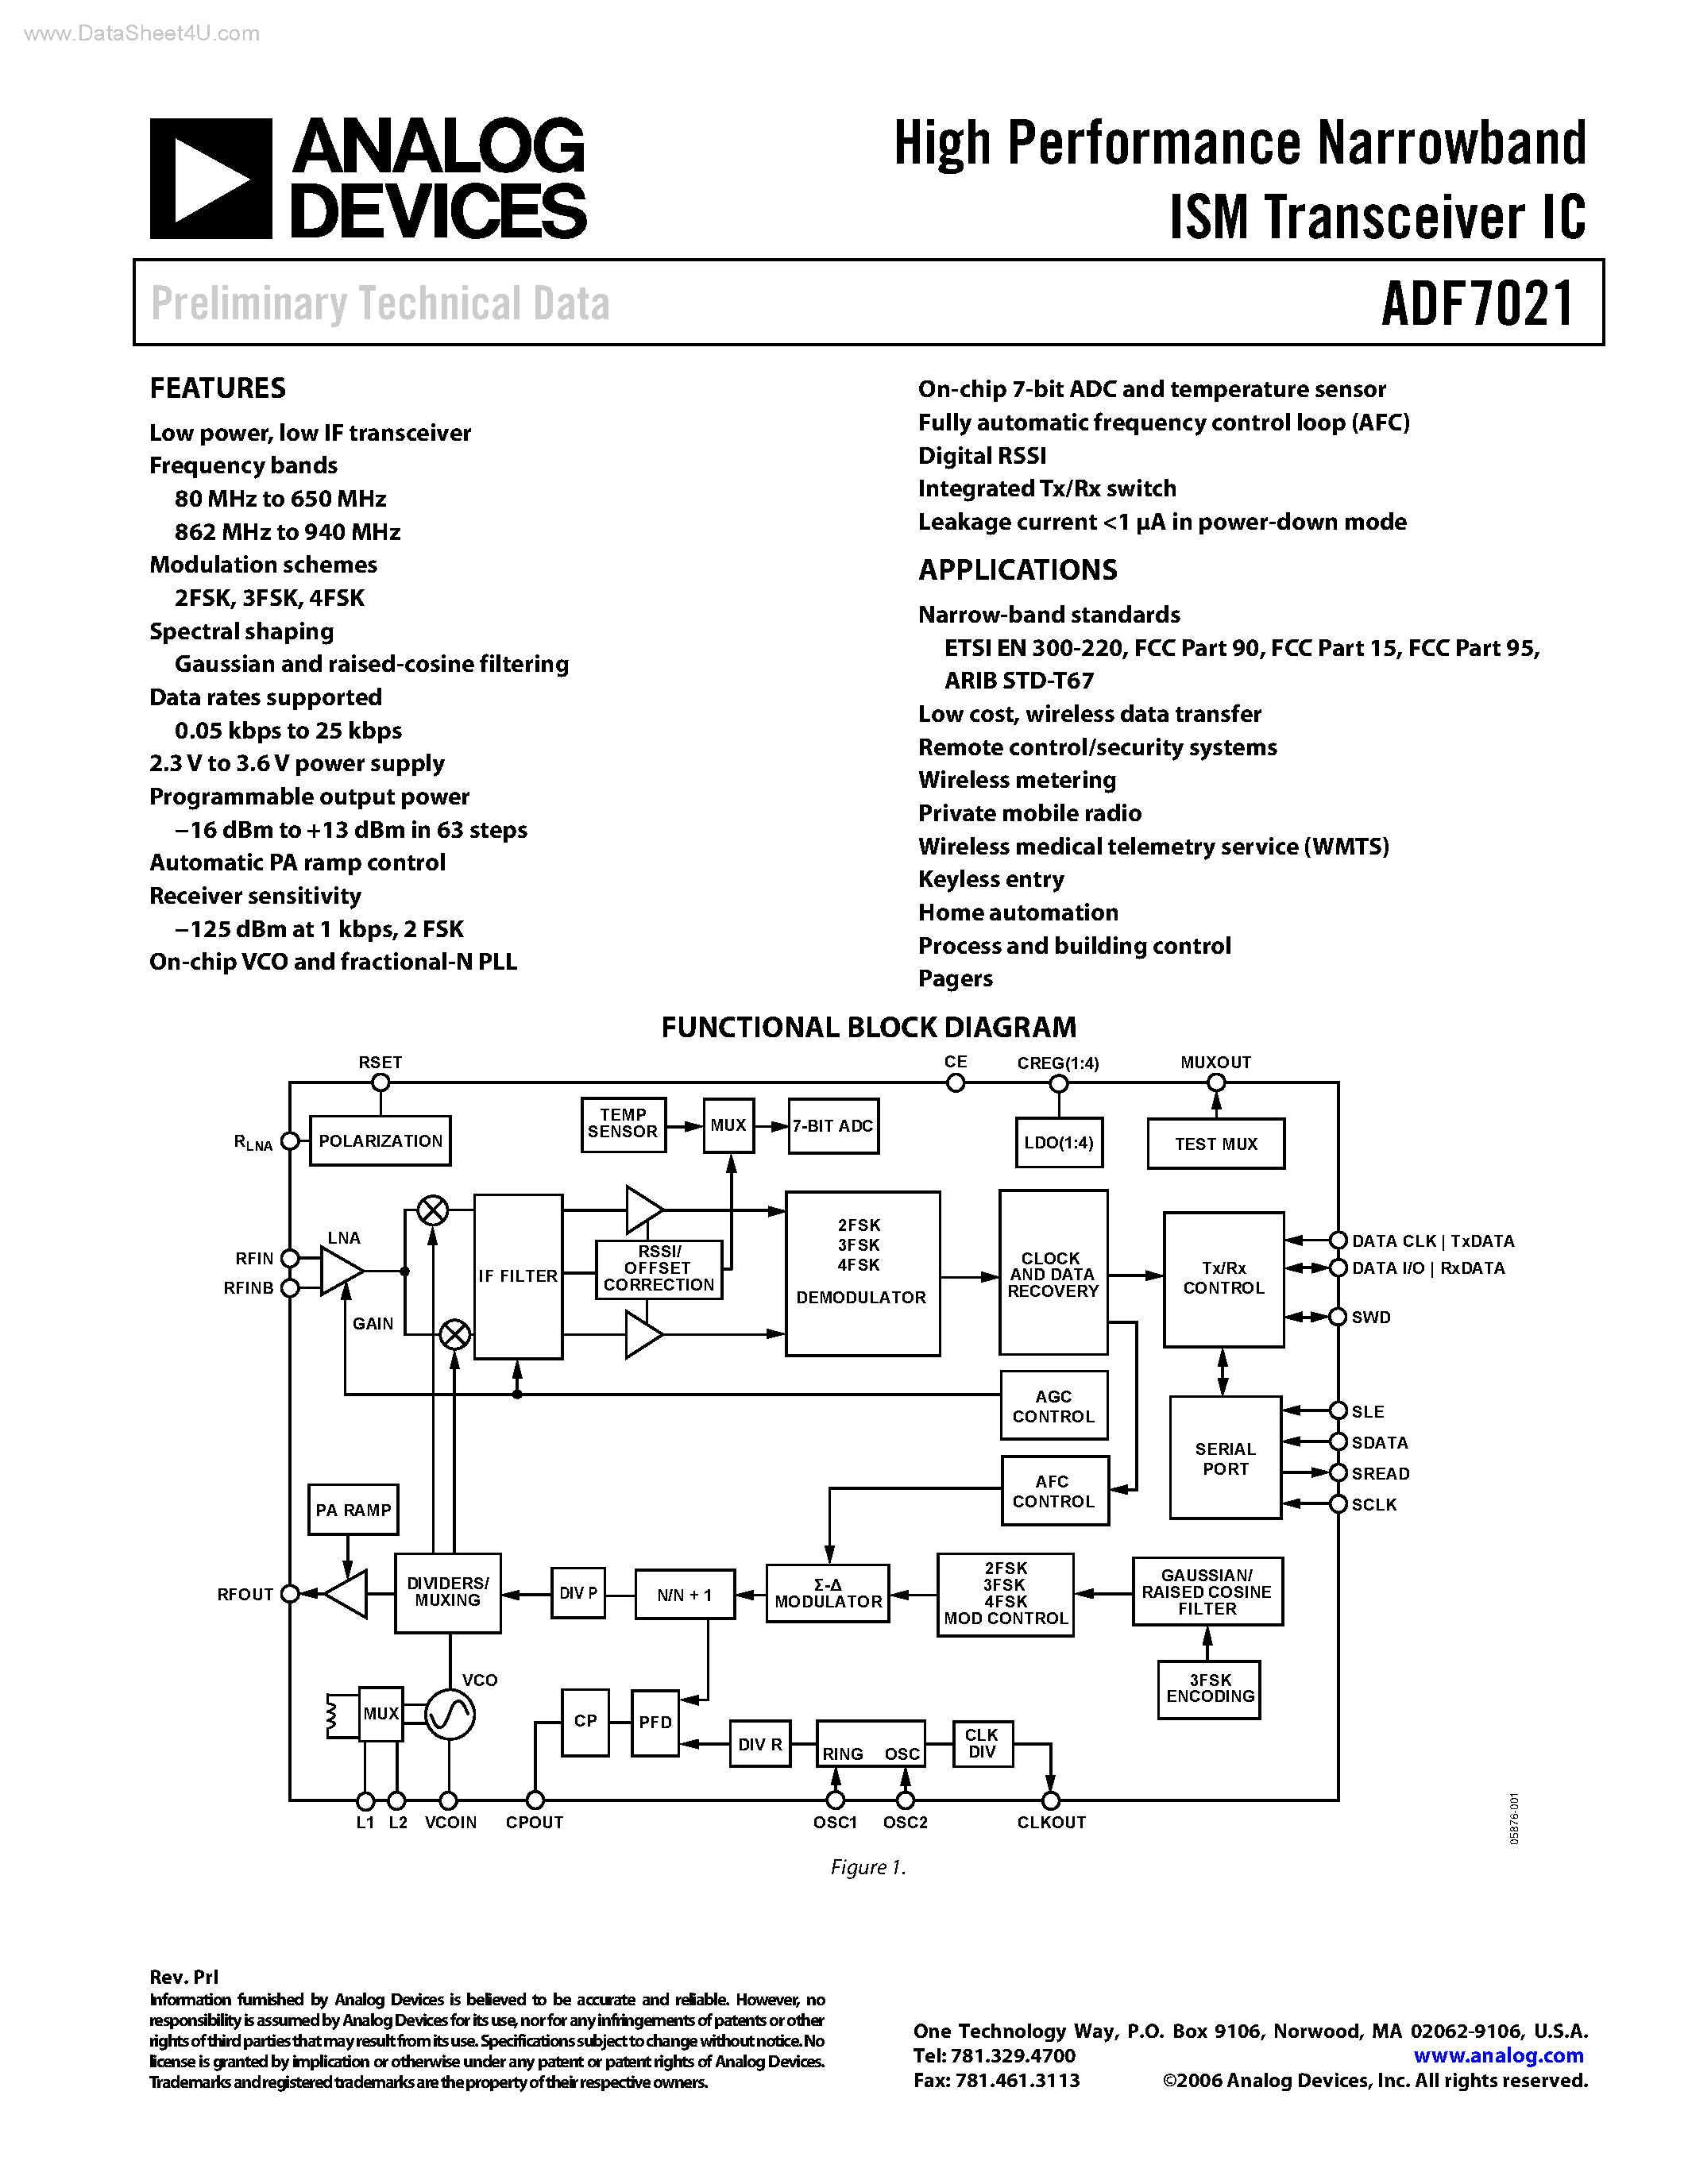 Даташит ADF7021 - High Performance Narrowband ISM Transceiver IC страница 1